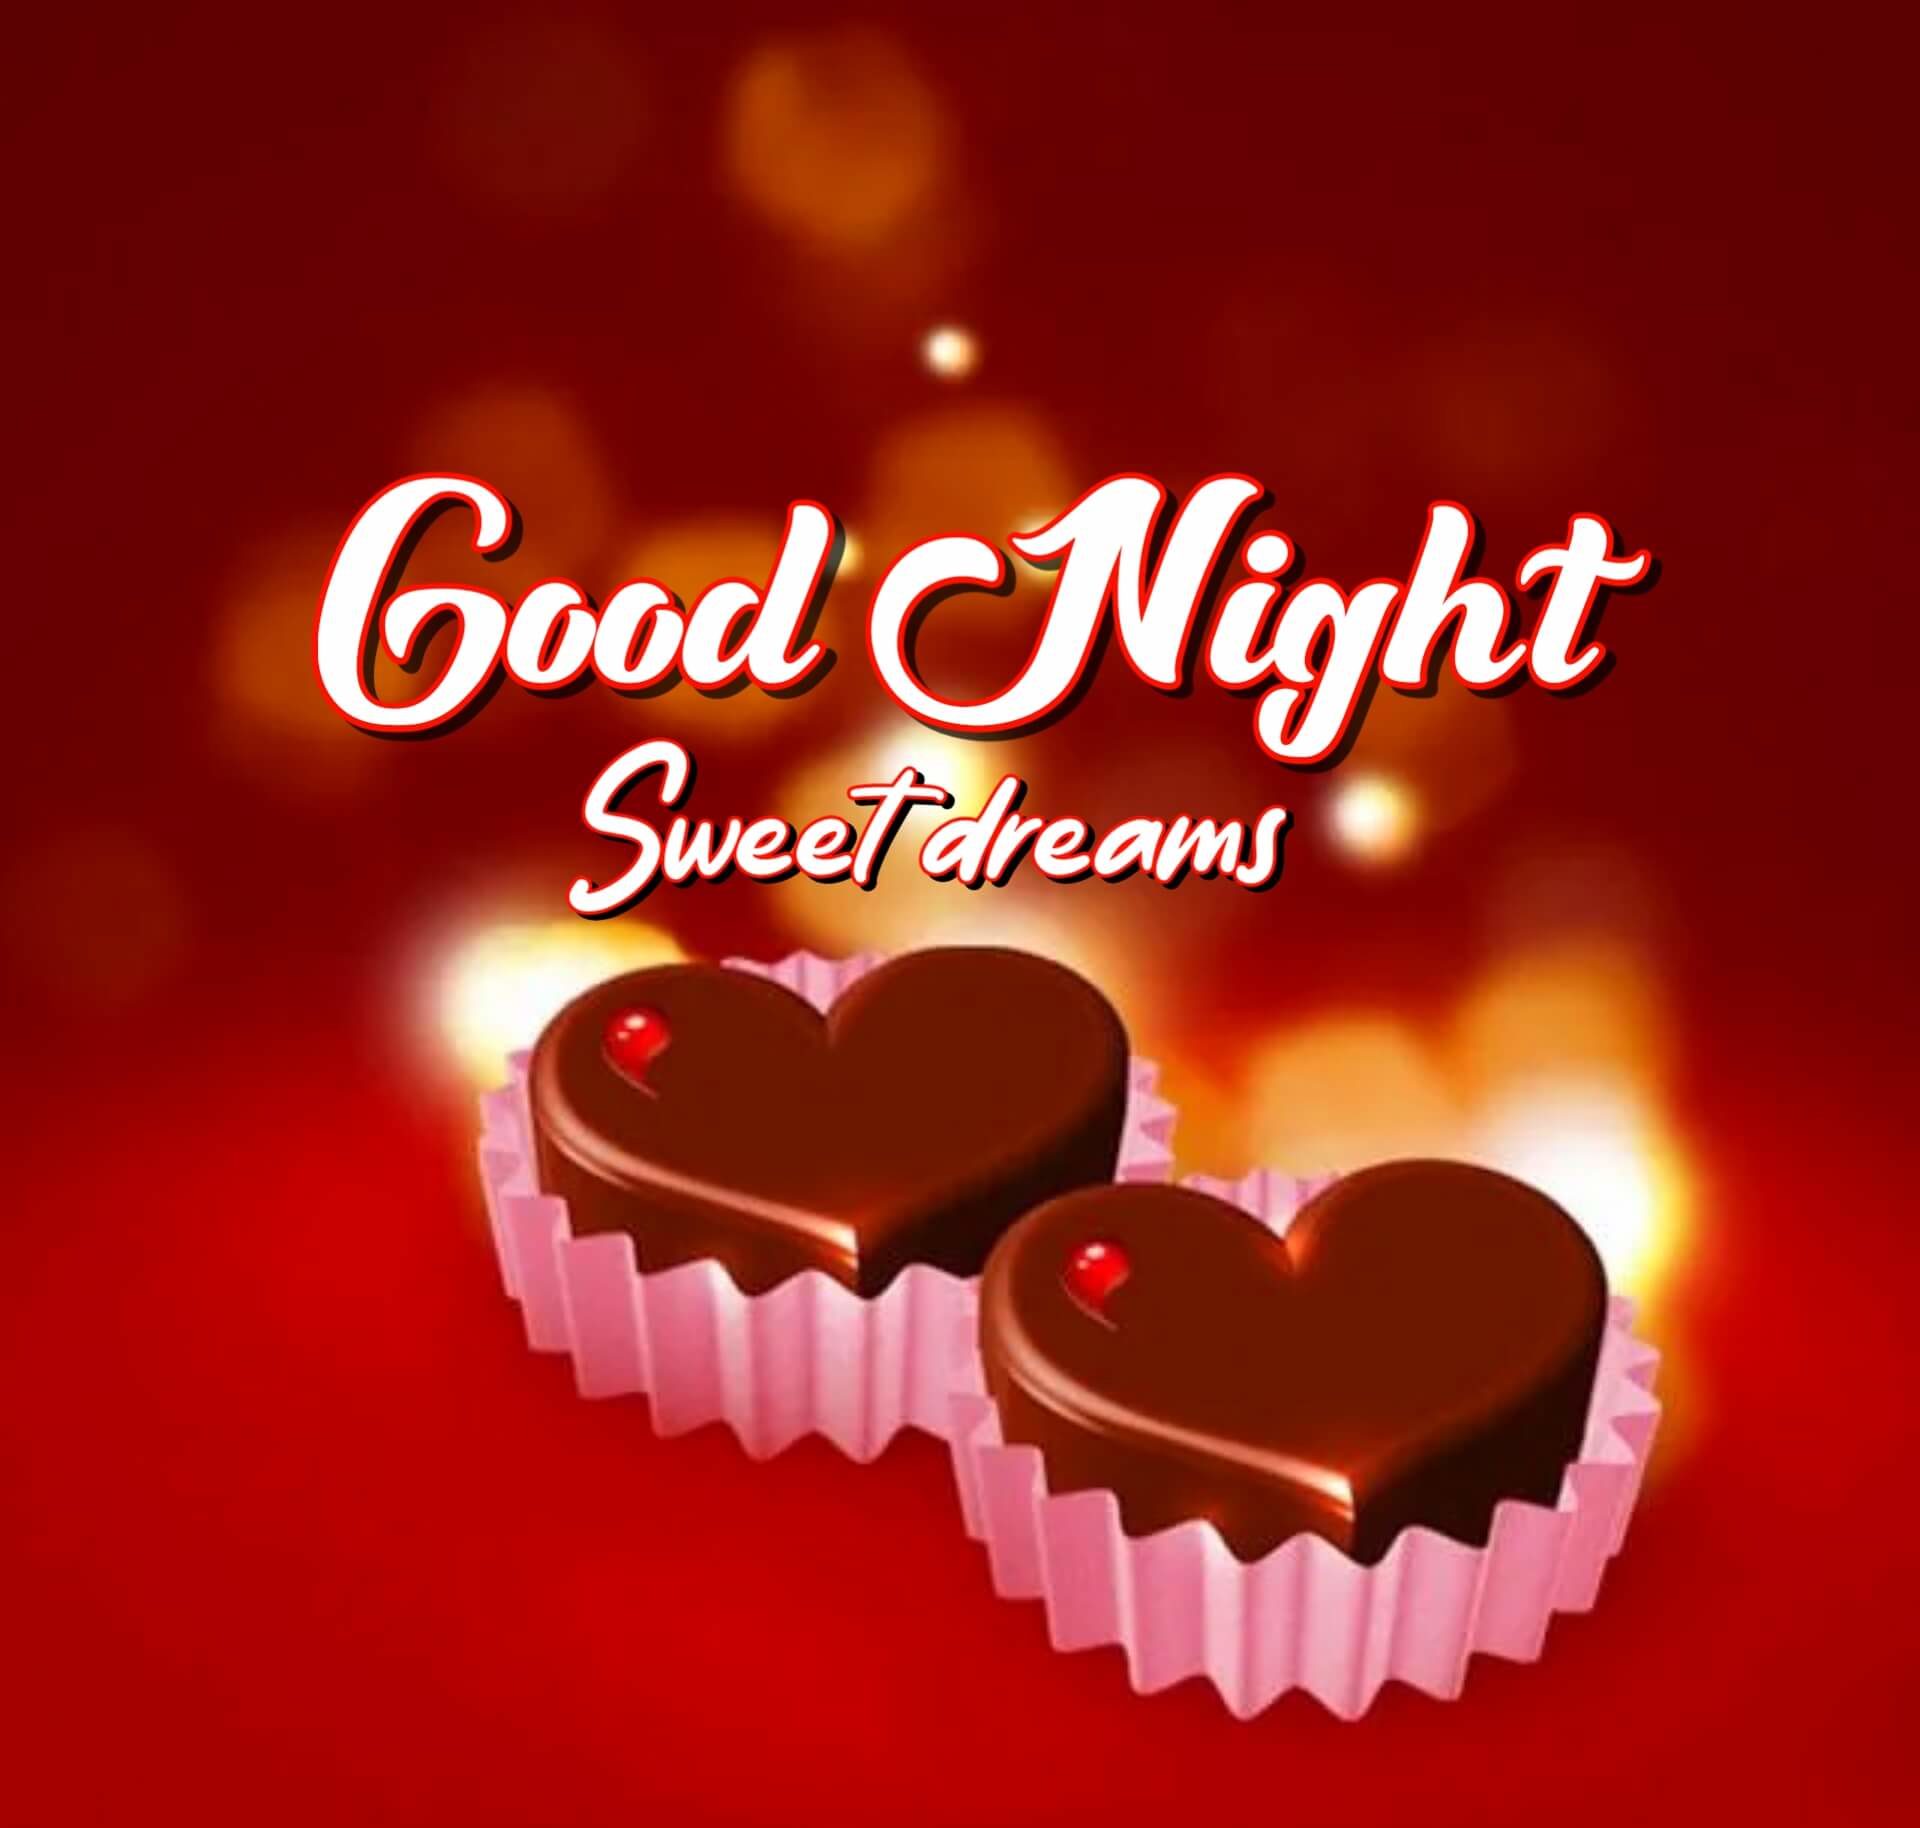 Love good night images,,